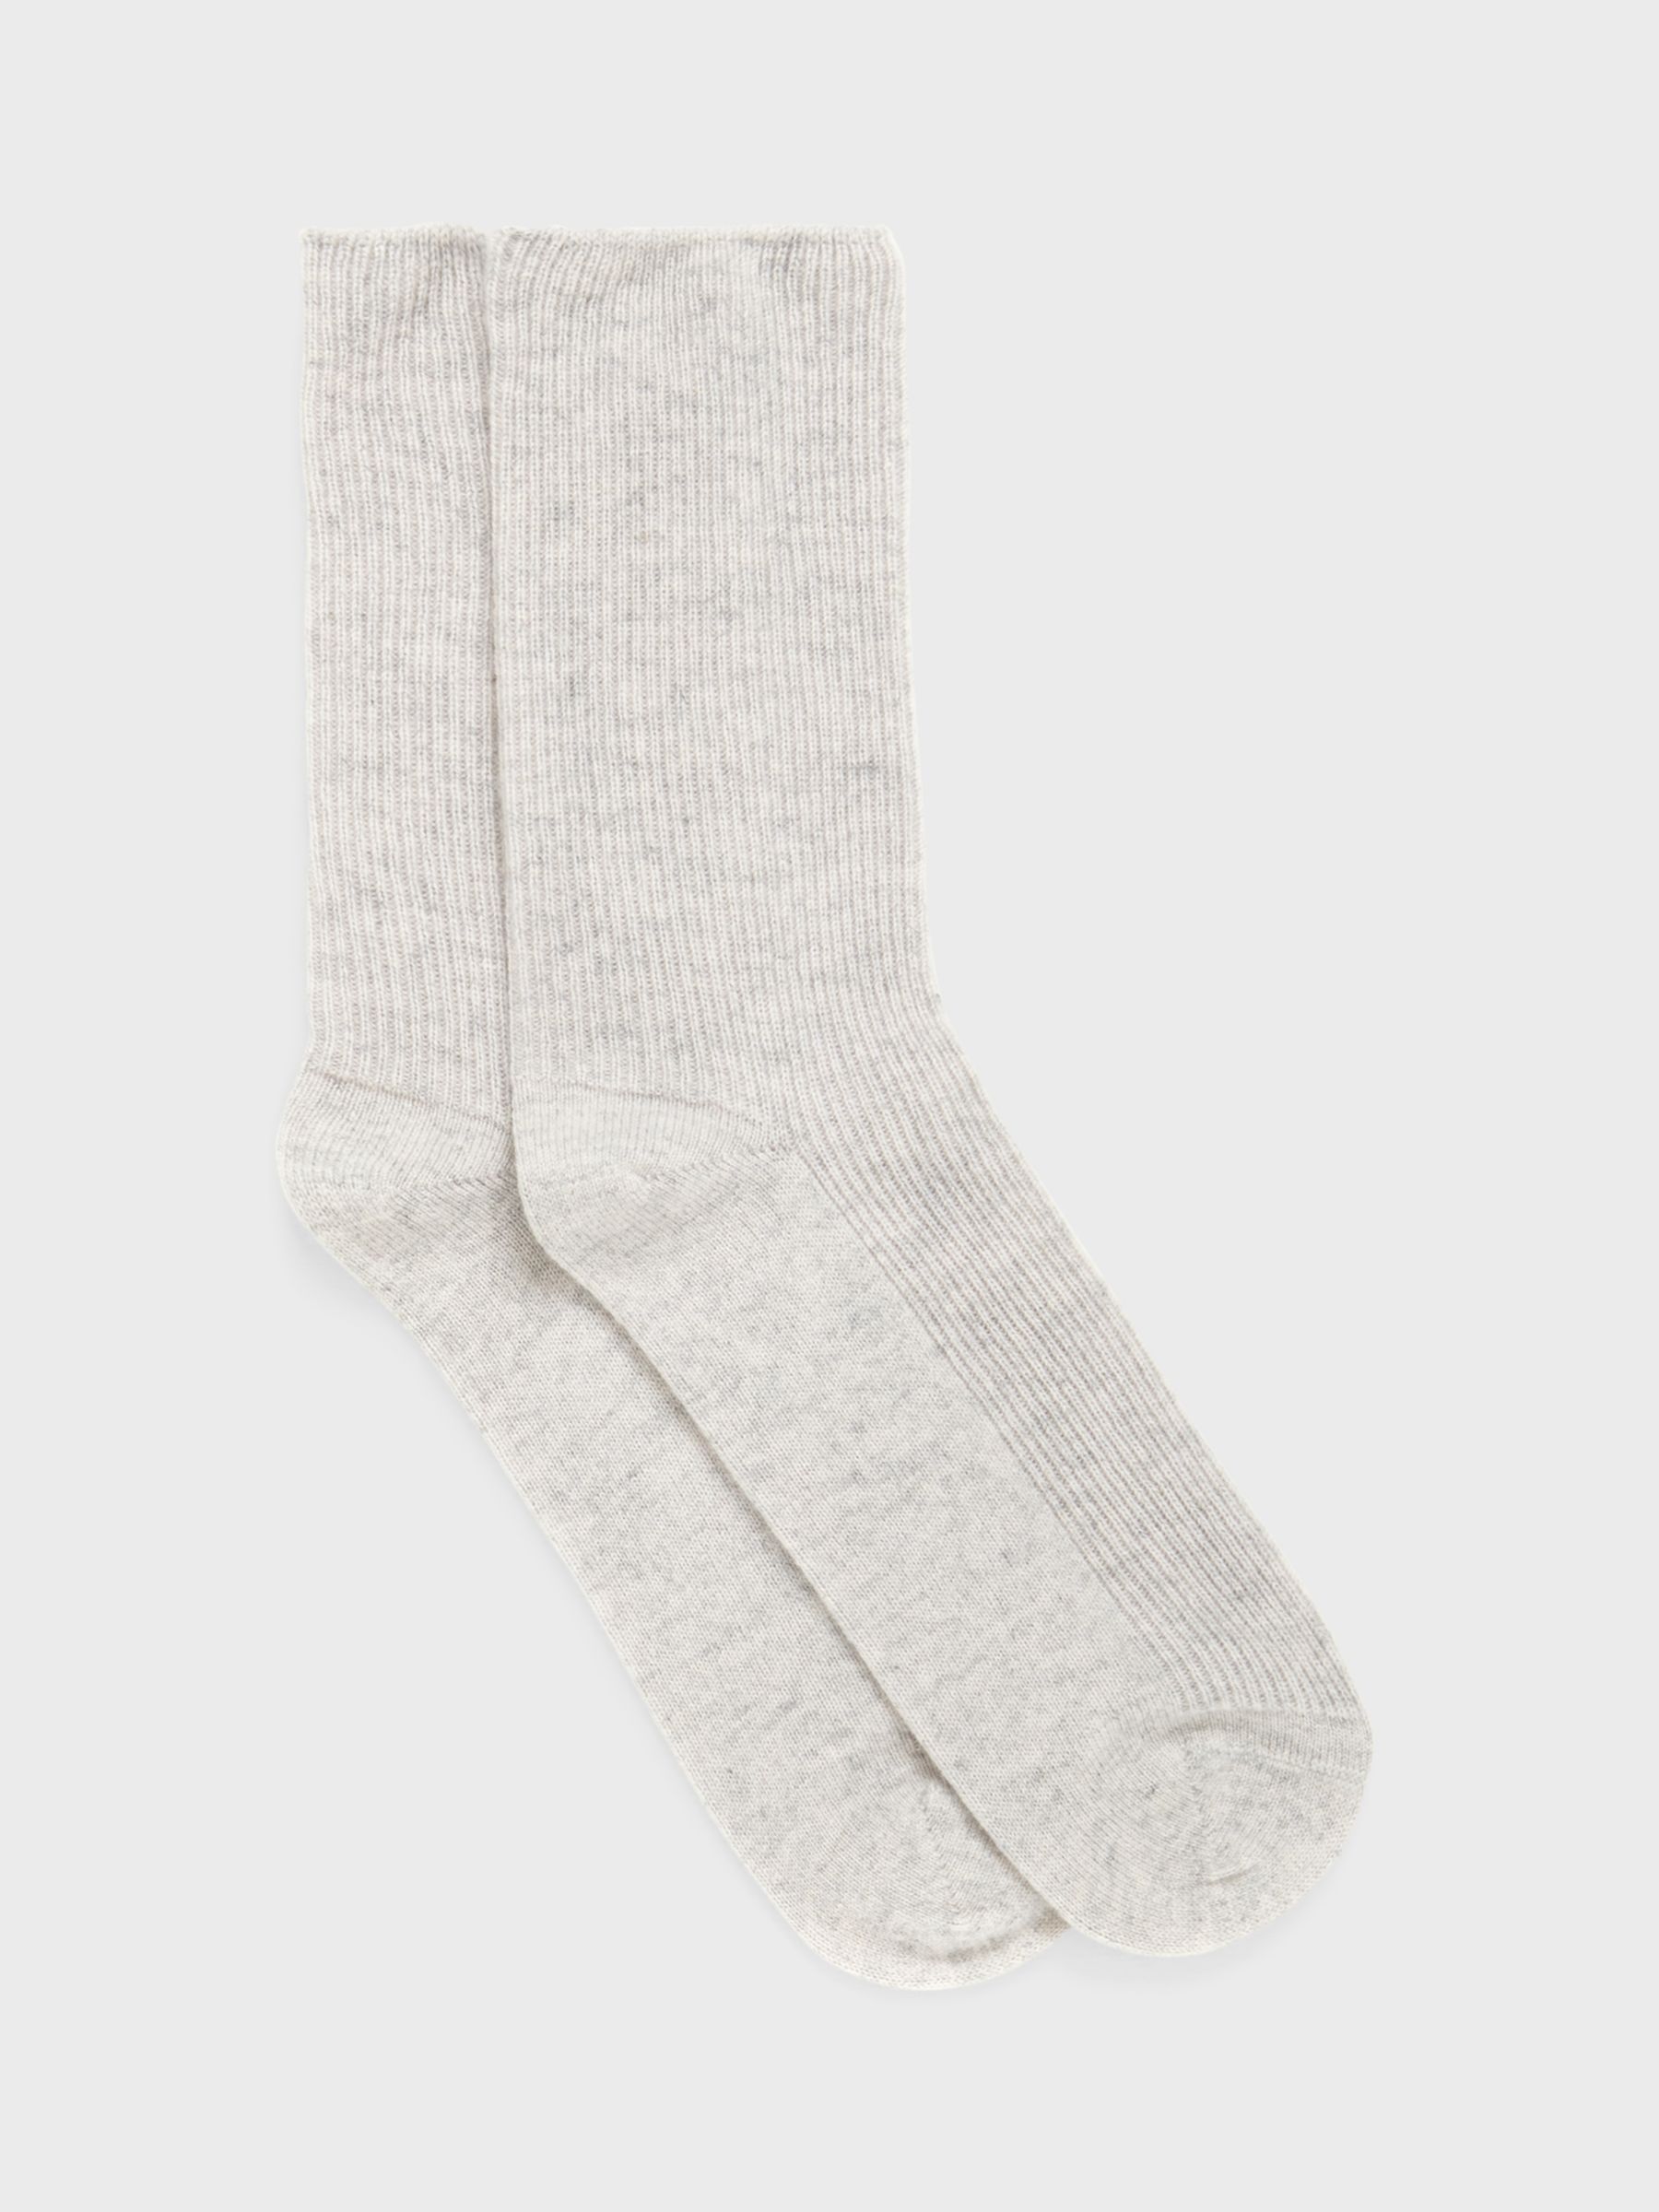 Hobbs Cashmere Ankle Socks, Light Grey at John Lewis & Partners